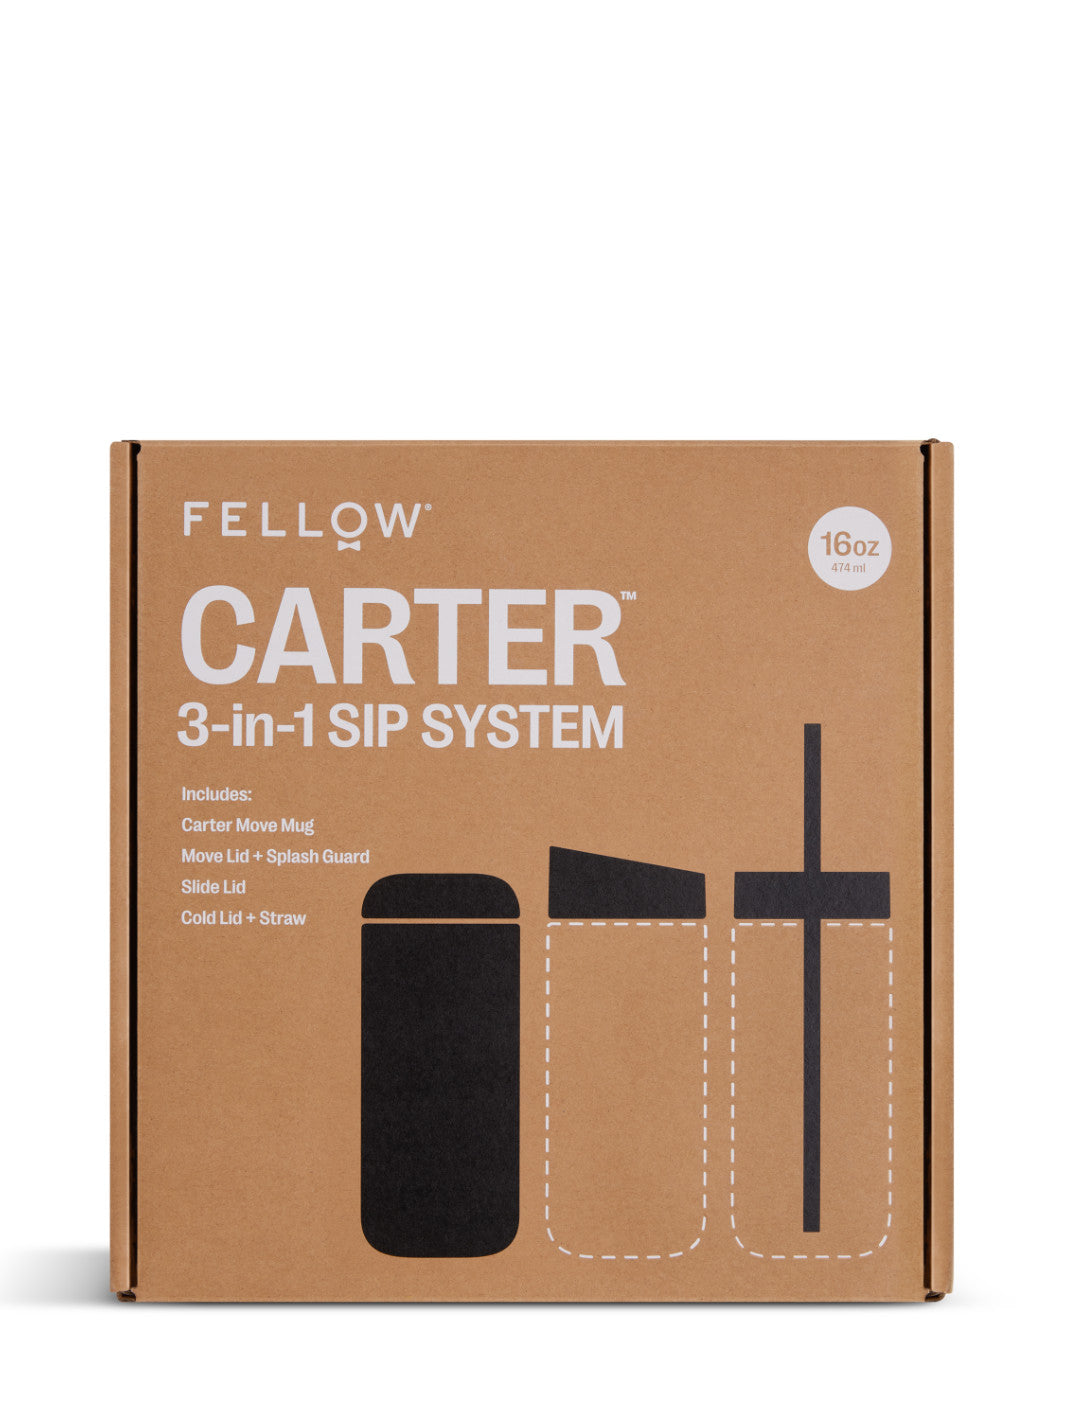 FELLOW Carter 3-in-1 Sip System (16oz/473ml) – Someware